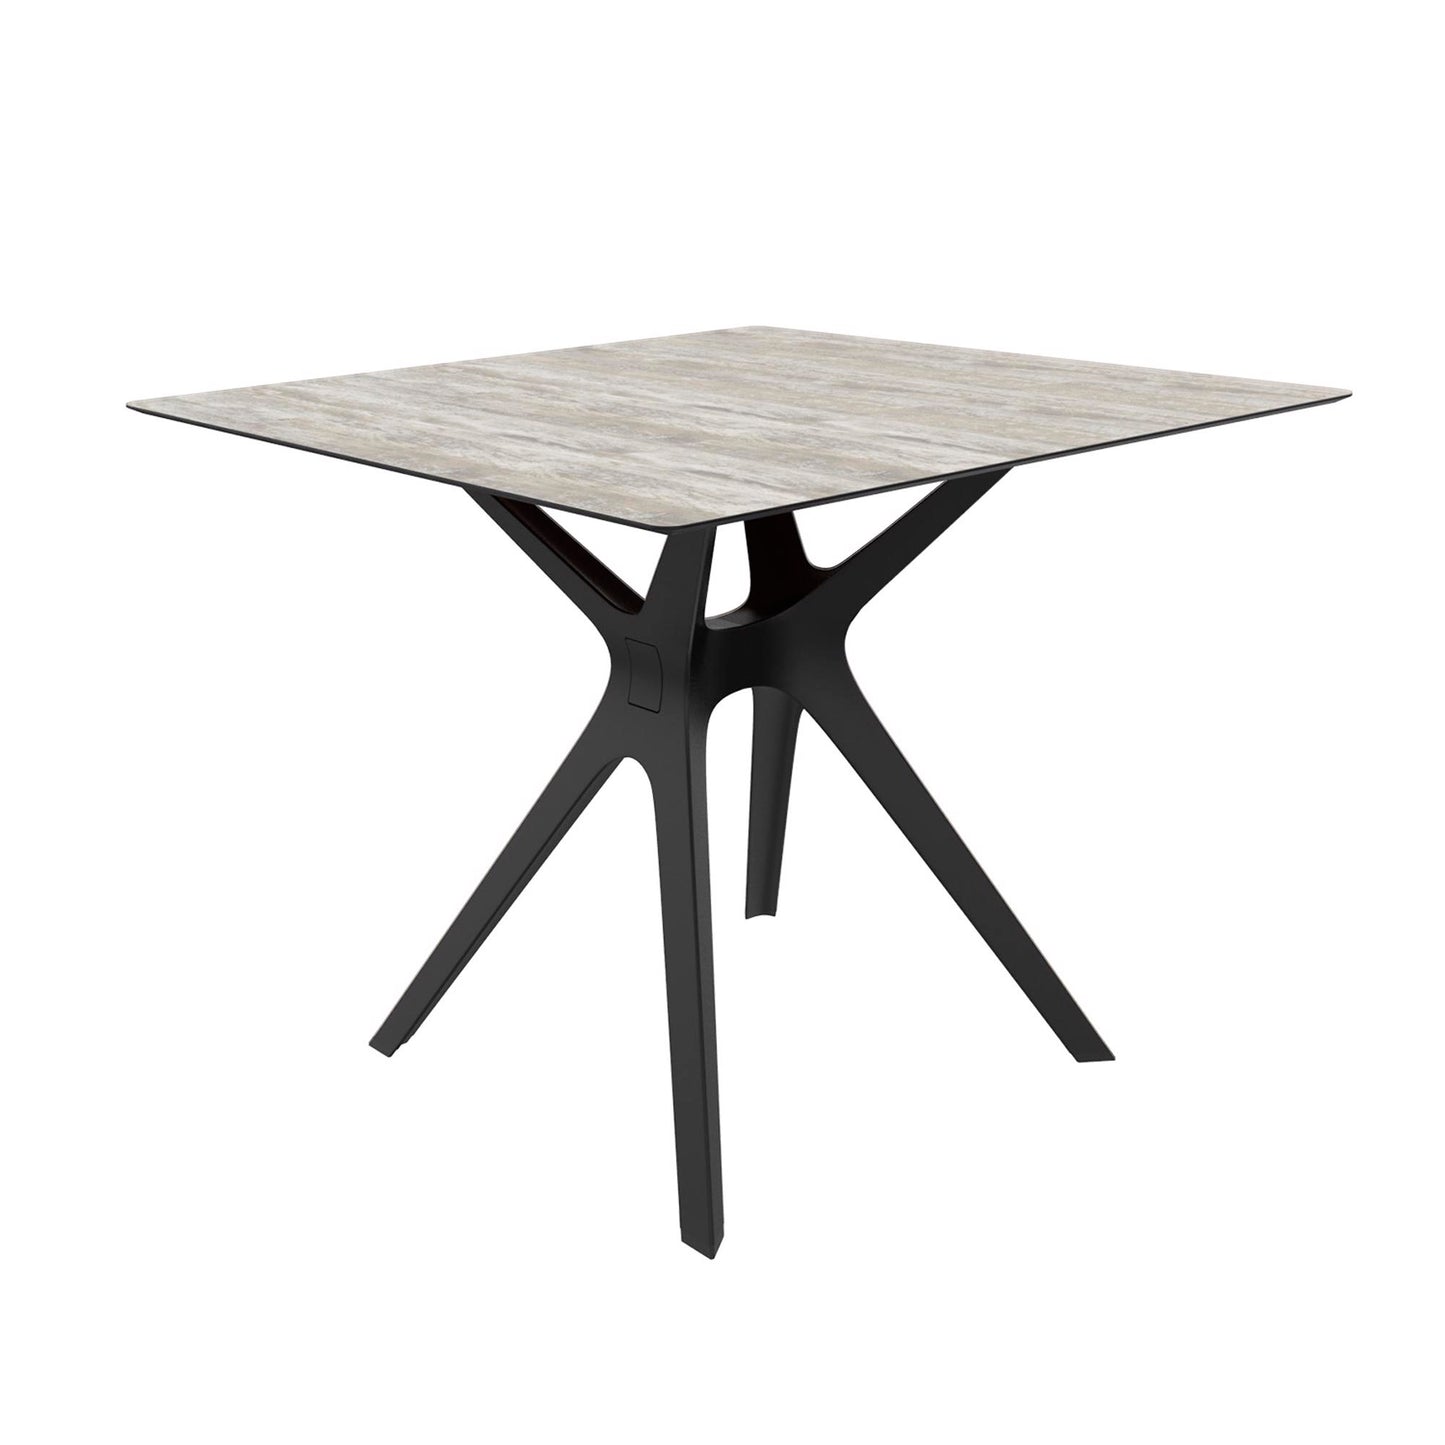 Resol vela s mesa cuadrada interior, exterior 90x90 pie negro - tablero madera lavada